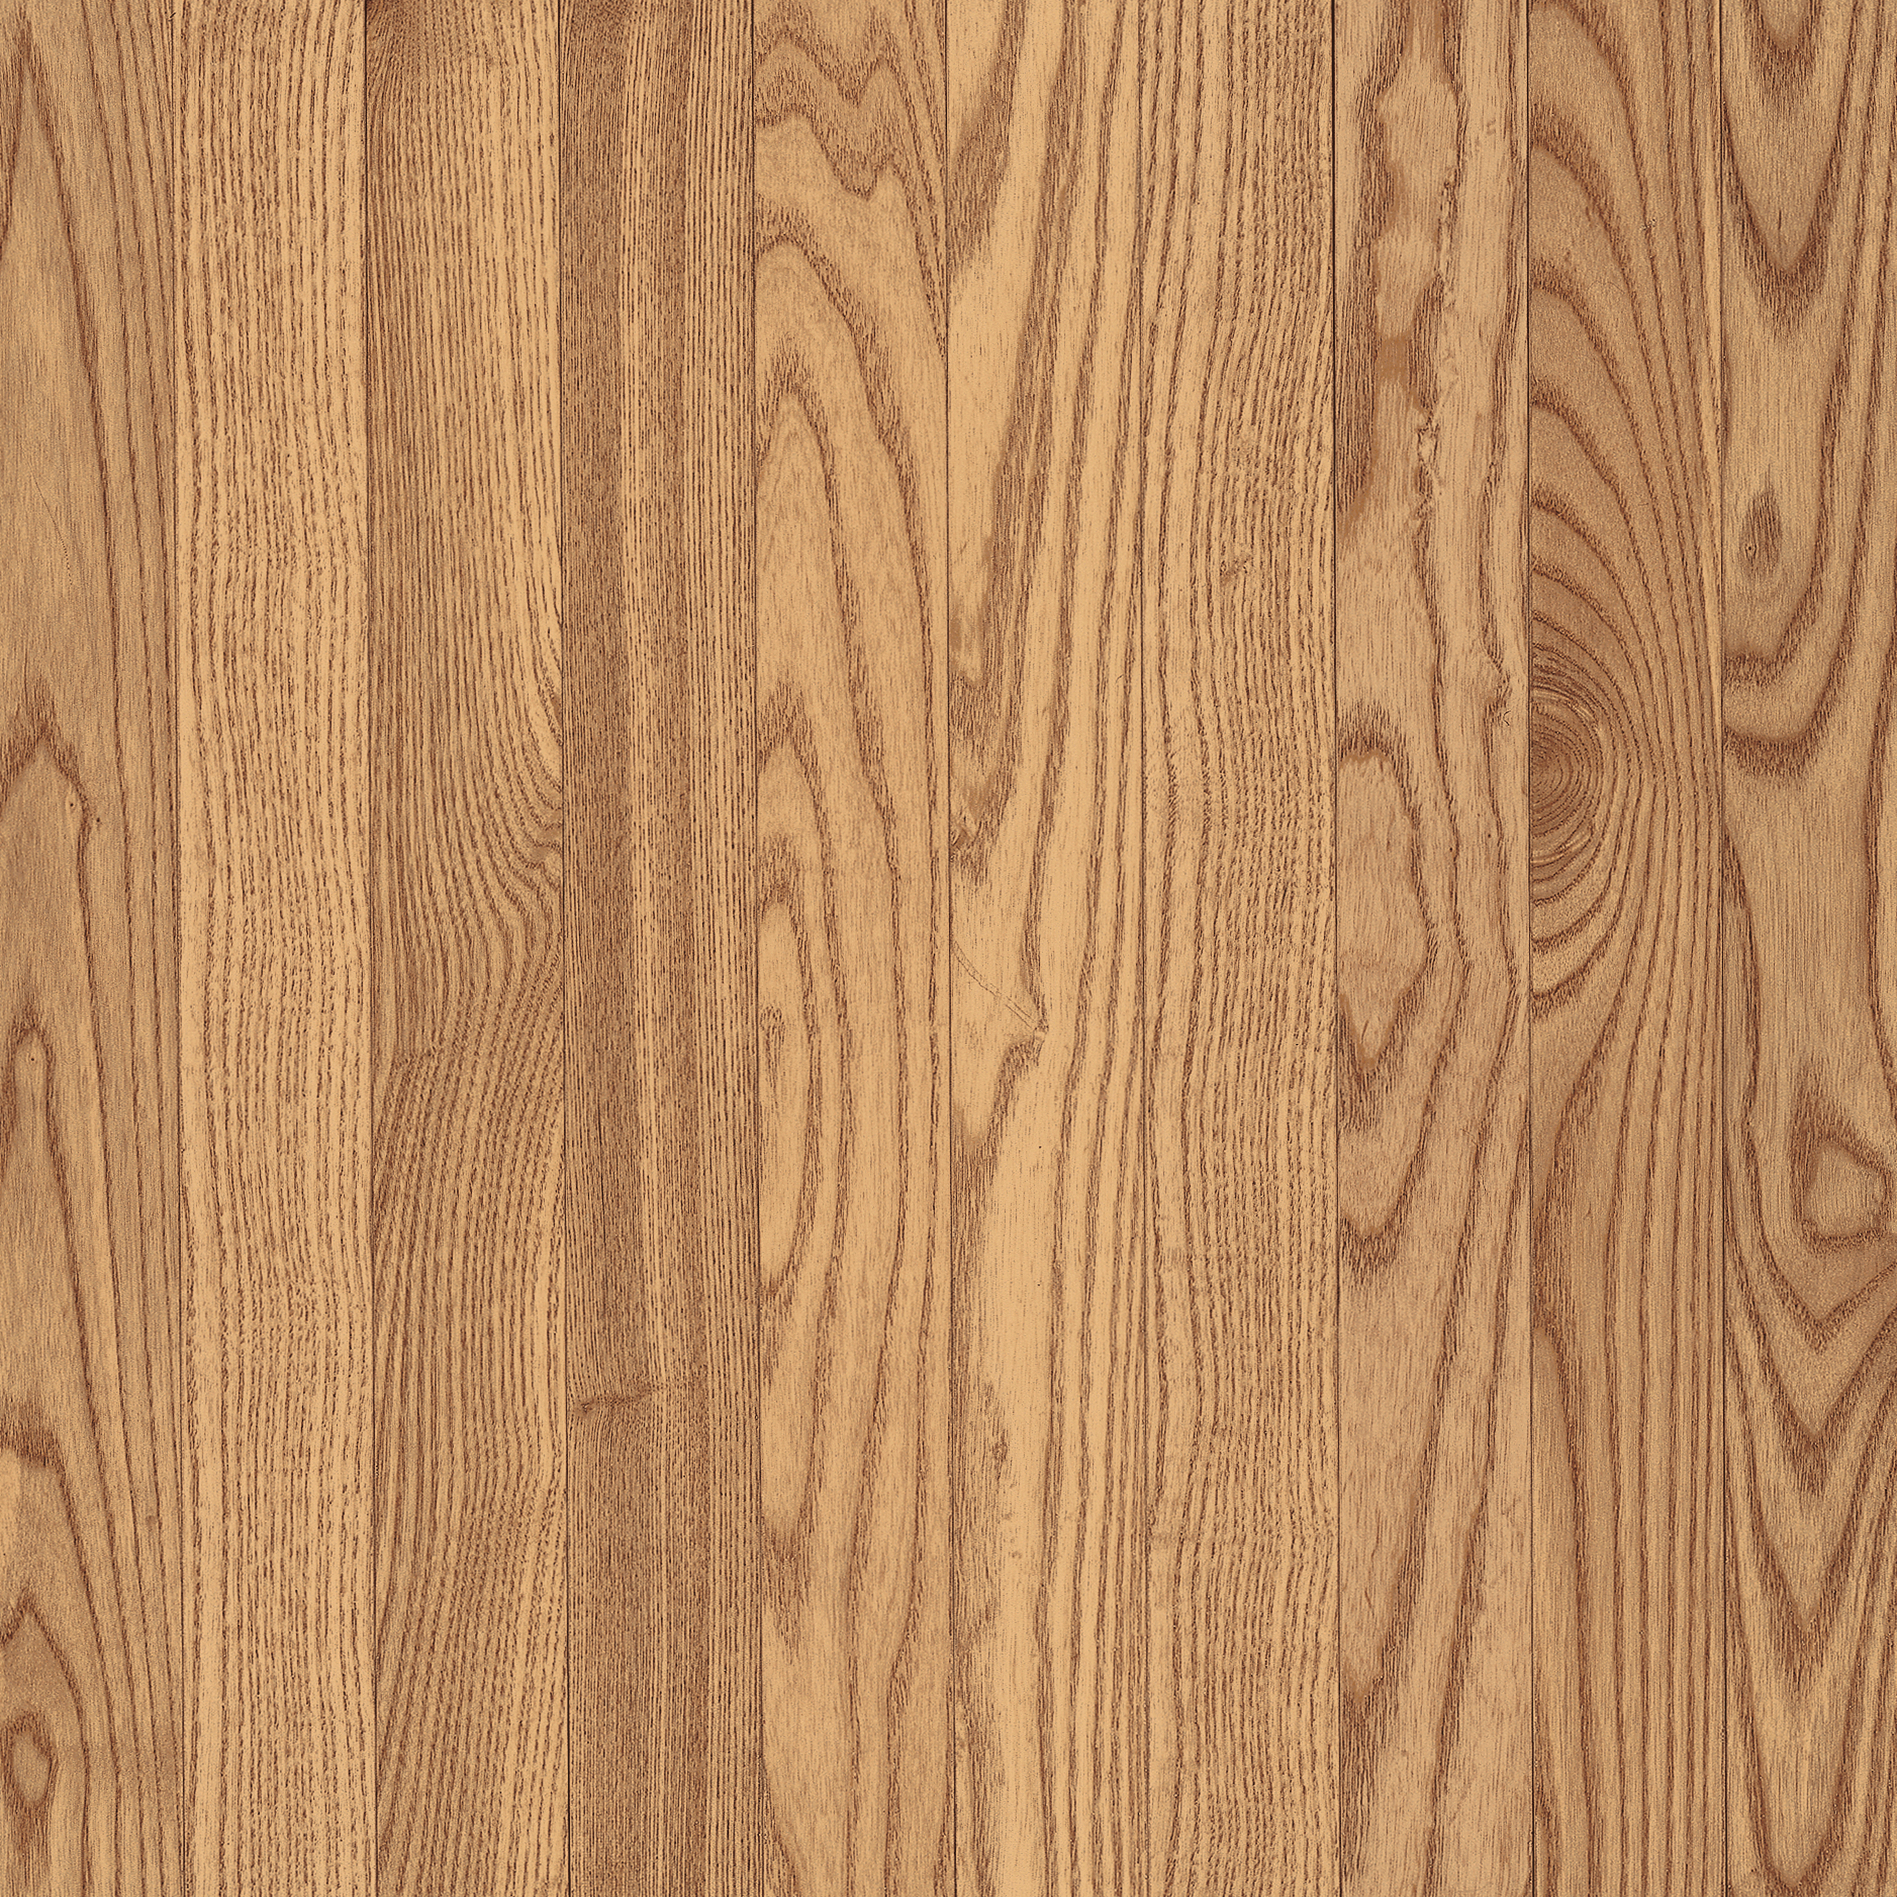 Red Oak Hardwood Flooring in Rockville from Alladin Carpet and Floors